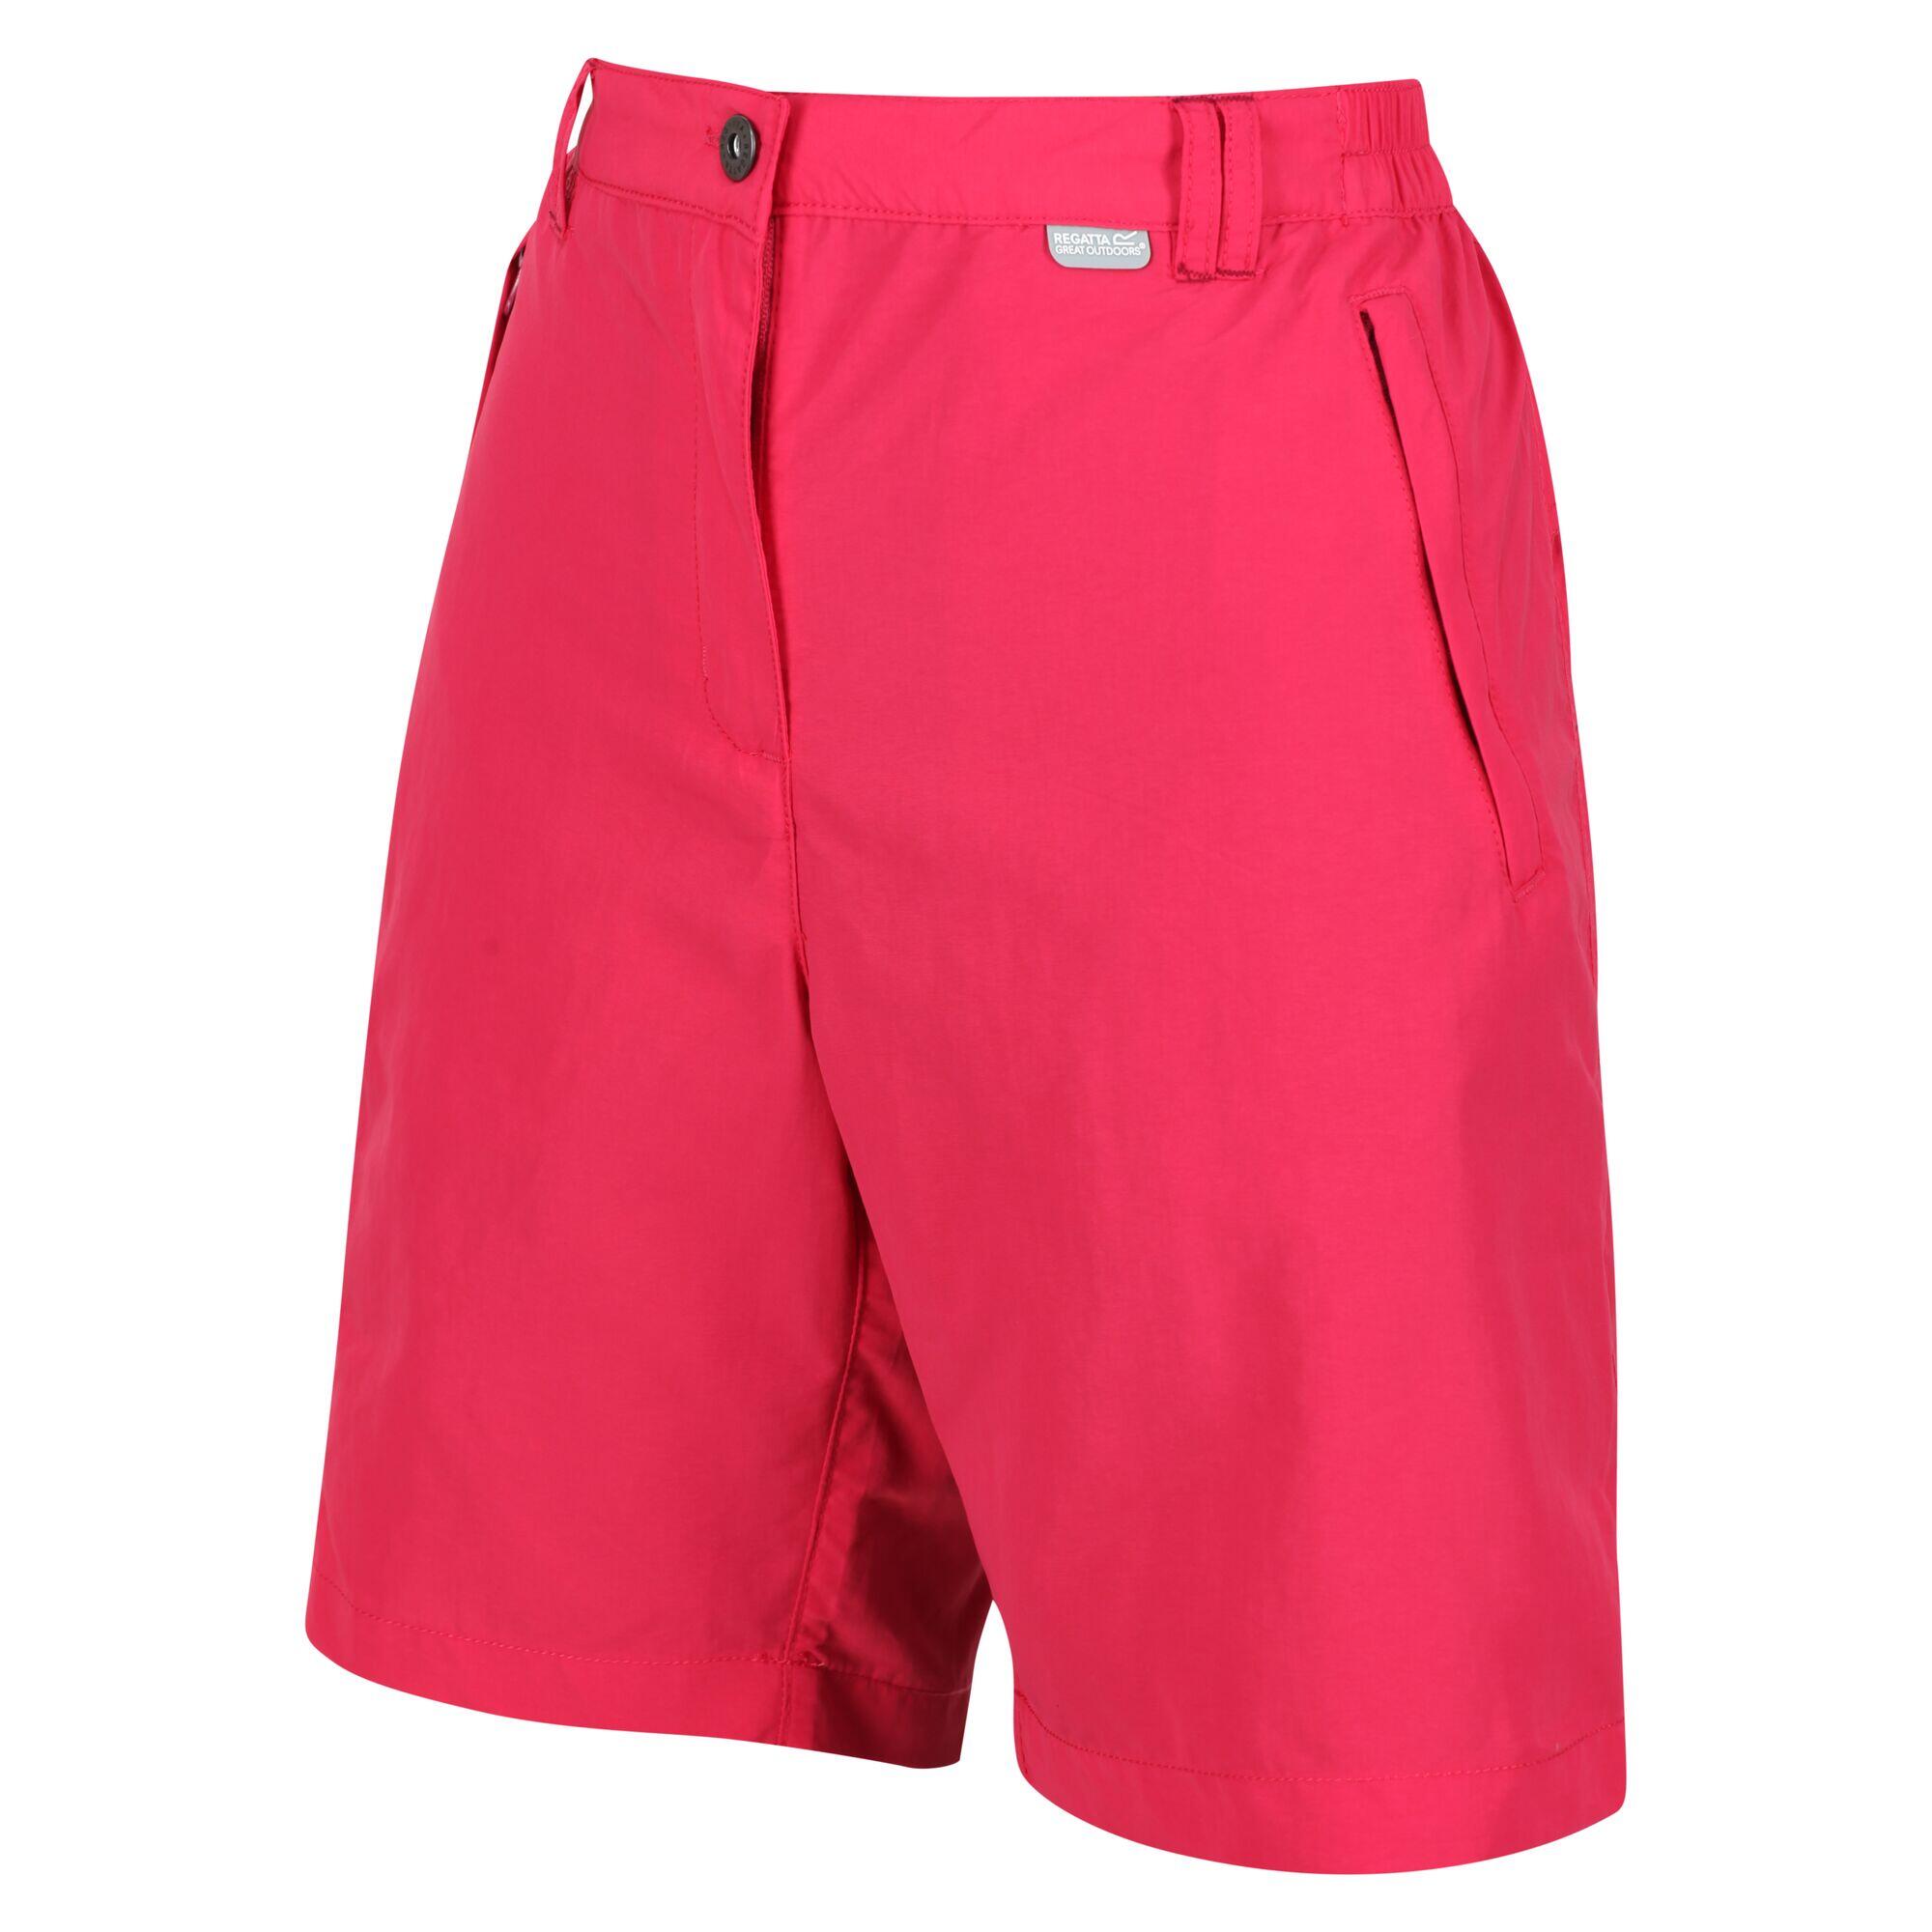 Chaska II Women's Hiking Shorts - Rethink Pink 5/6